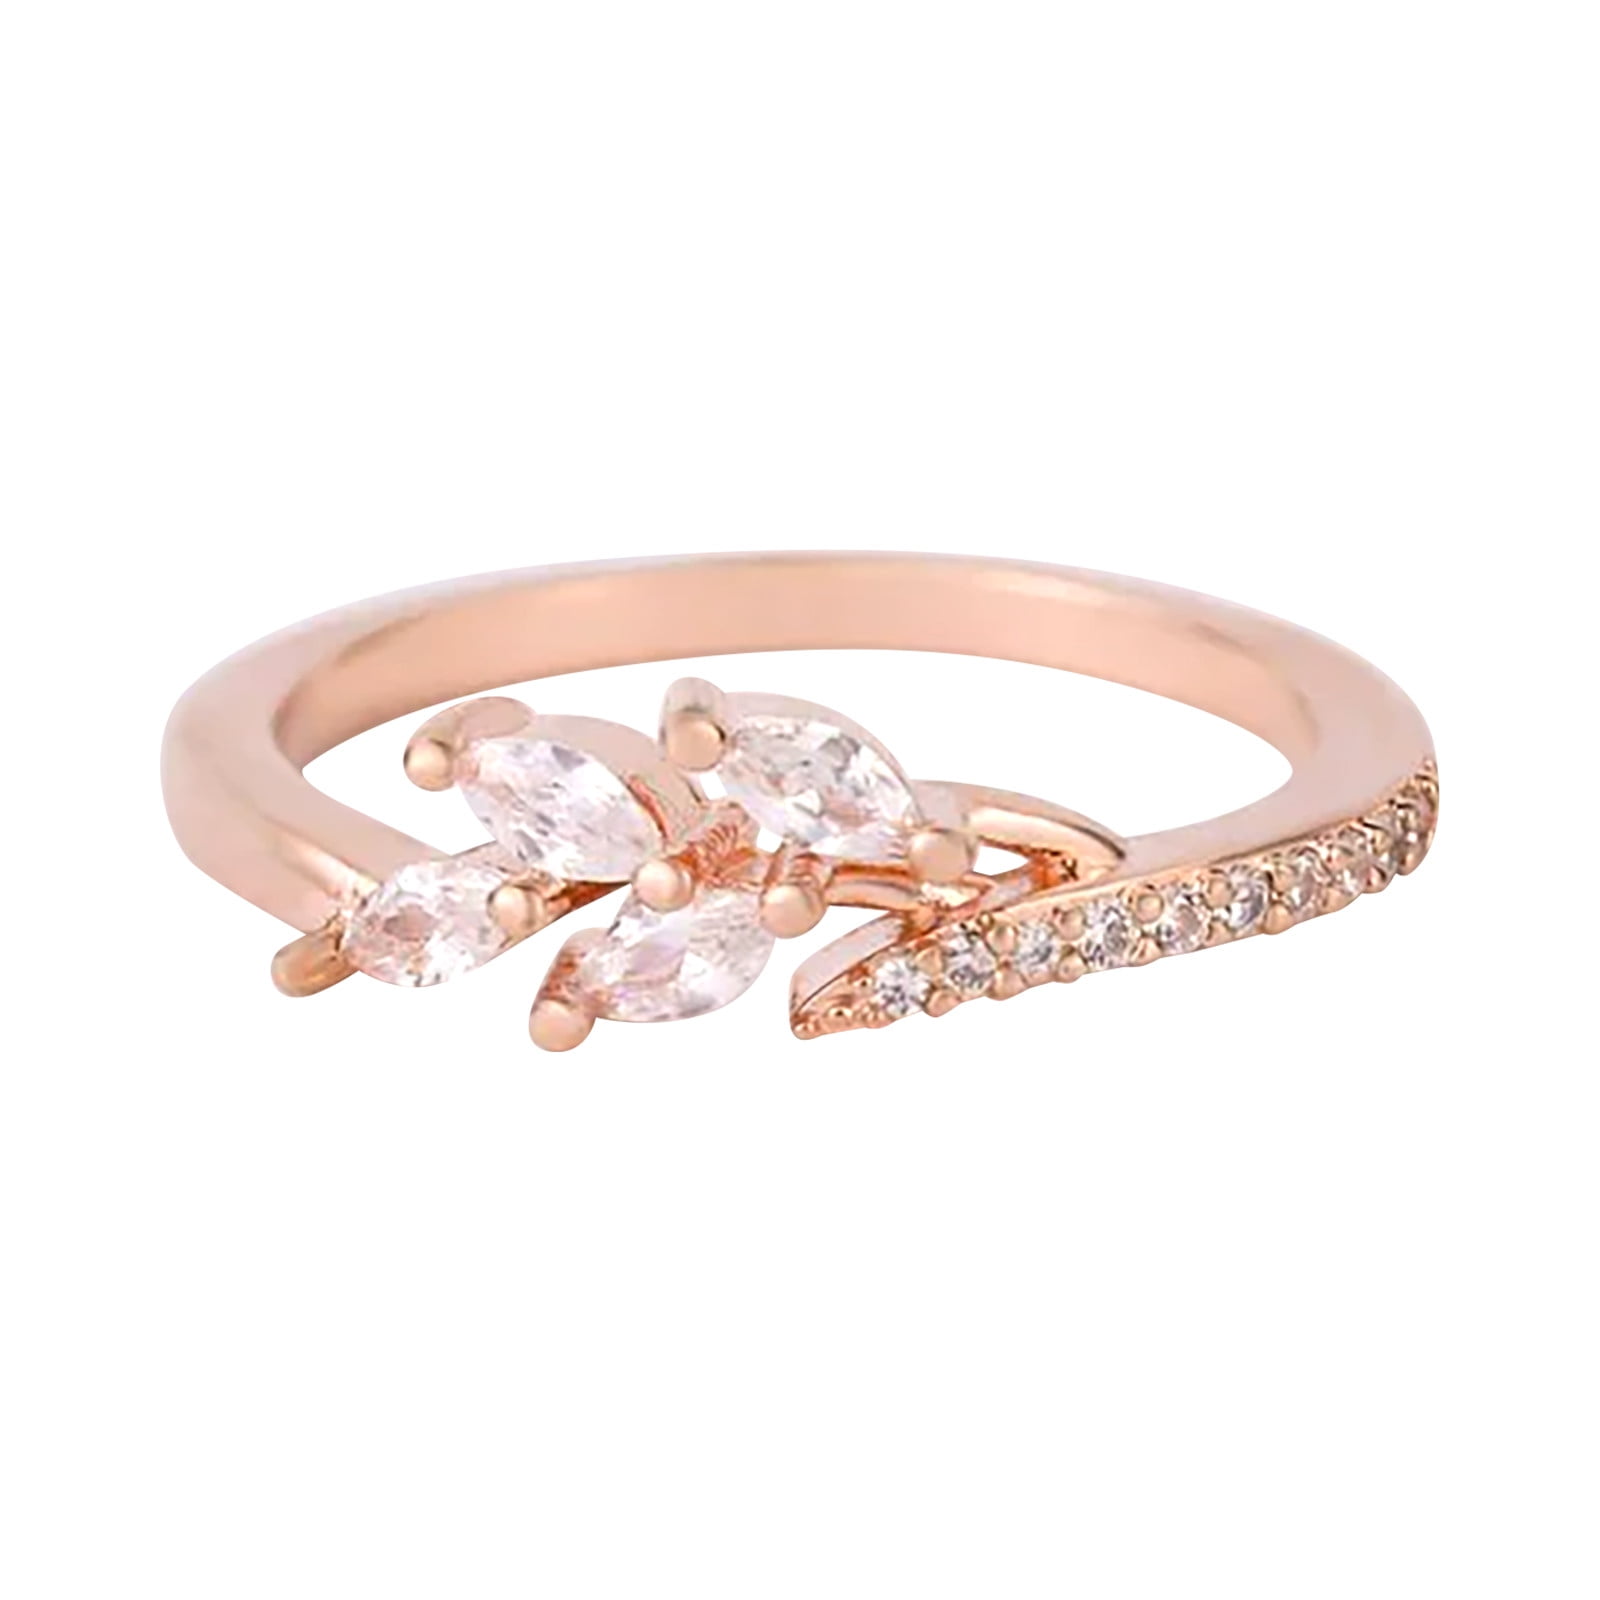 NUOKO Finger Ring Beautiful Jewelry Rings Love Rings Women's Fretting ...